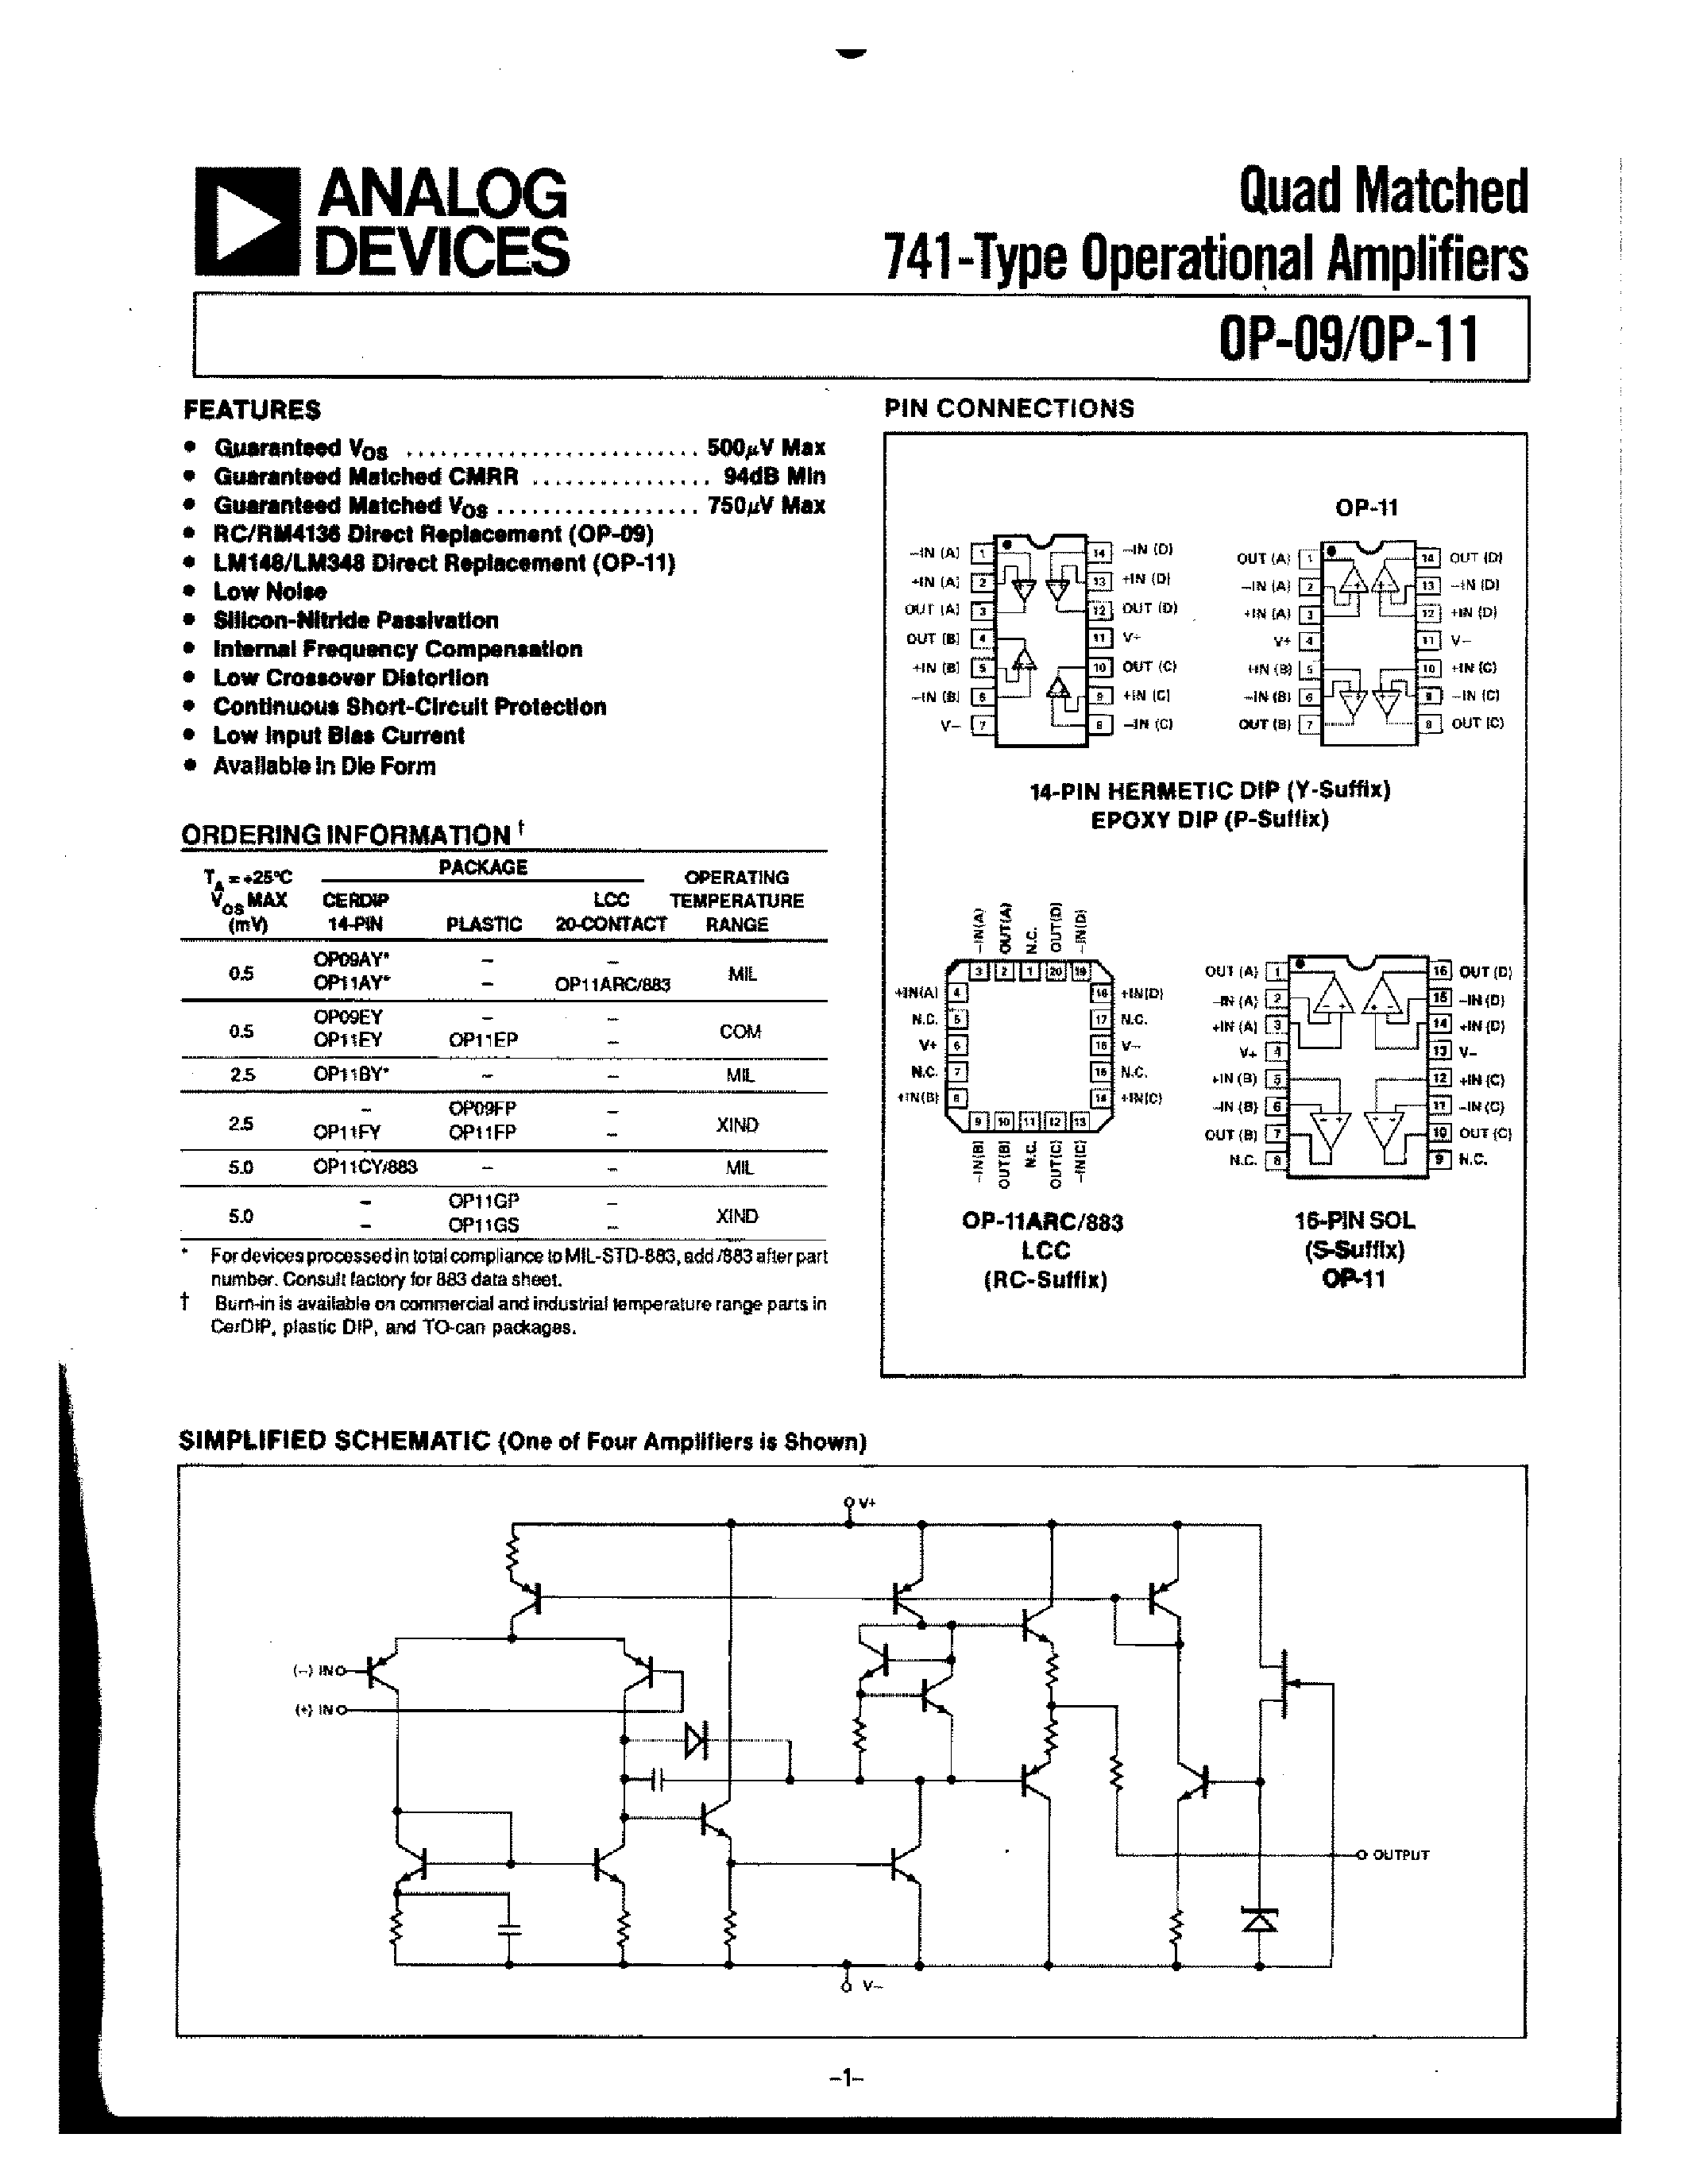 Даташит OP-11 - Quad Matched 741-Type Operational Amplifiers страница 1